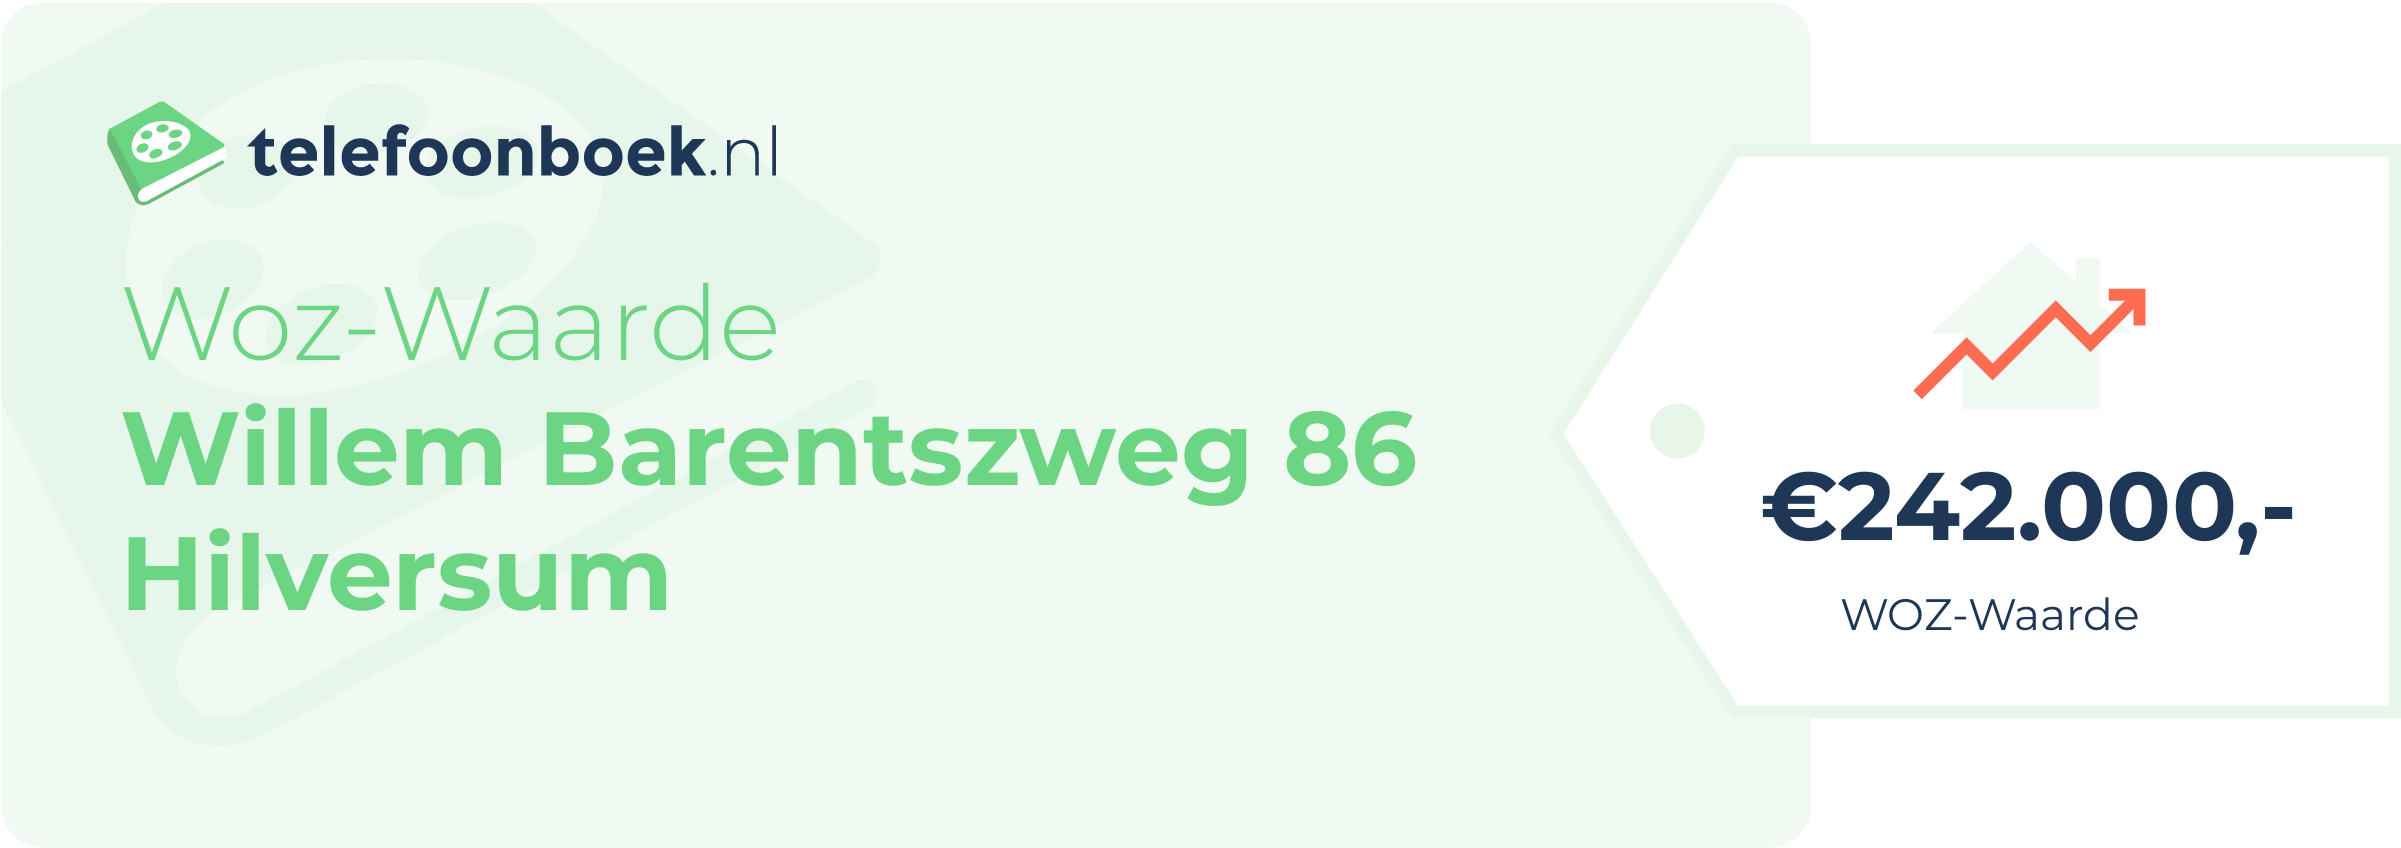 WOZ-waarde Willem Barentszweg 86 Hilversum